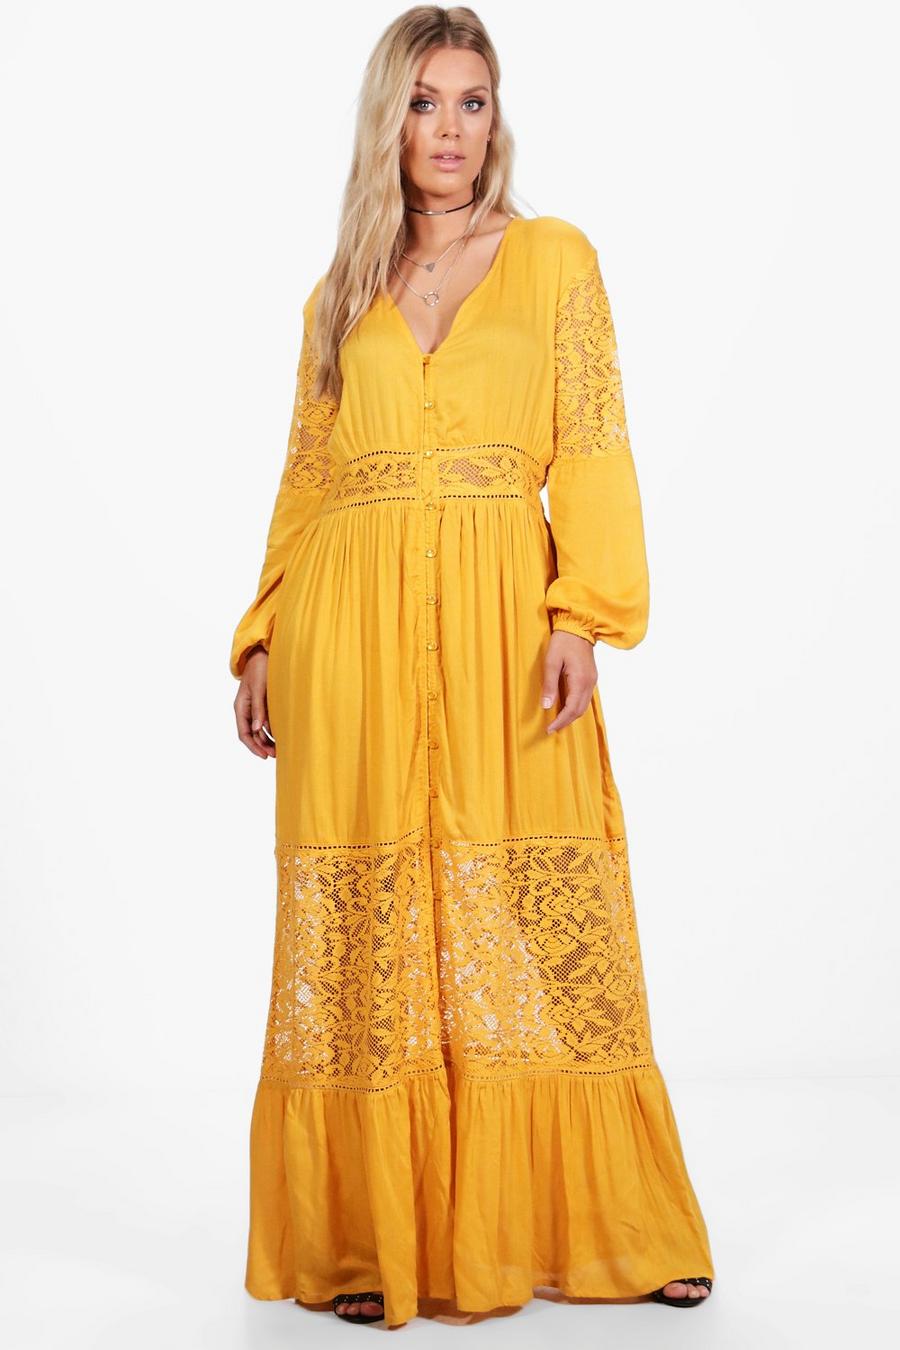 Ochre giallo Plus Boho Lace Insert Maxi Dress